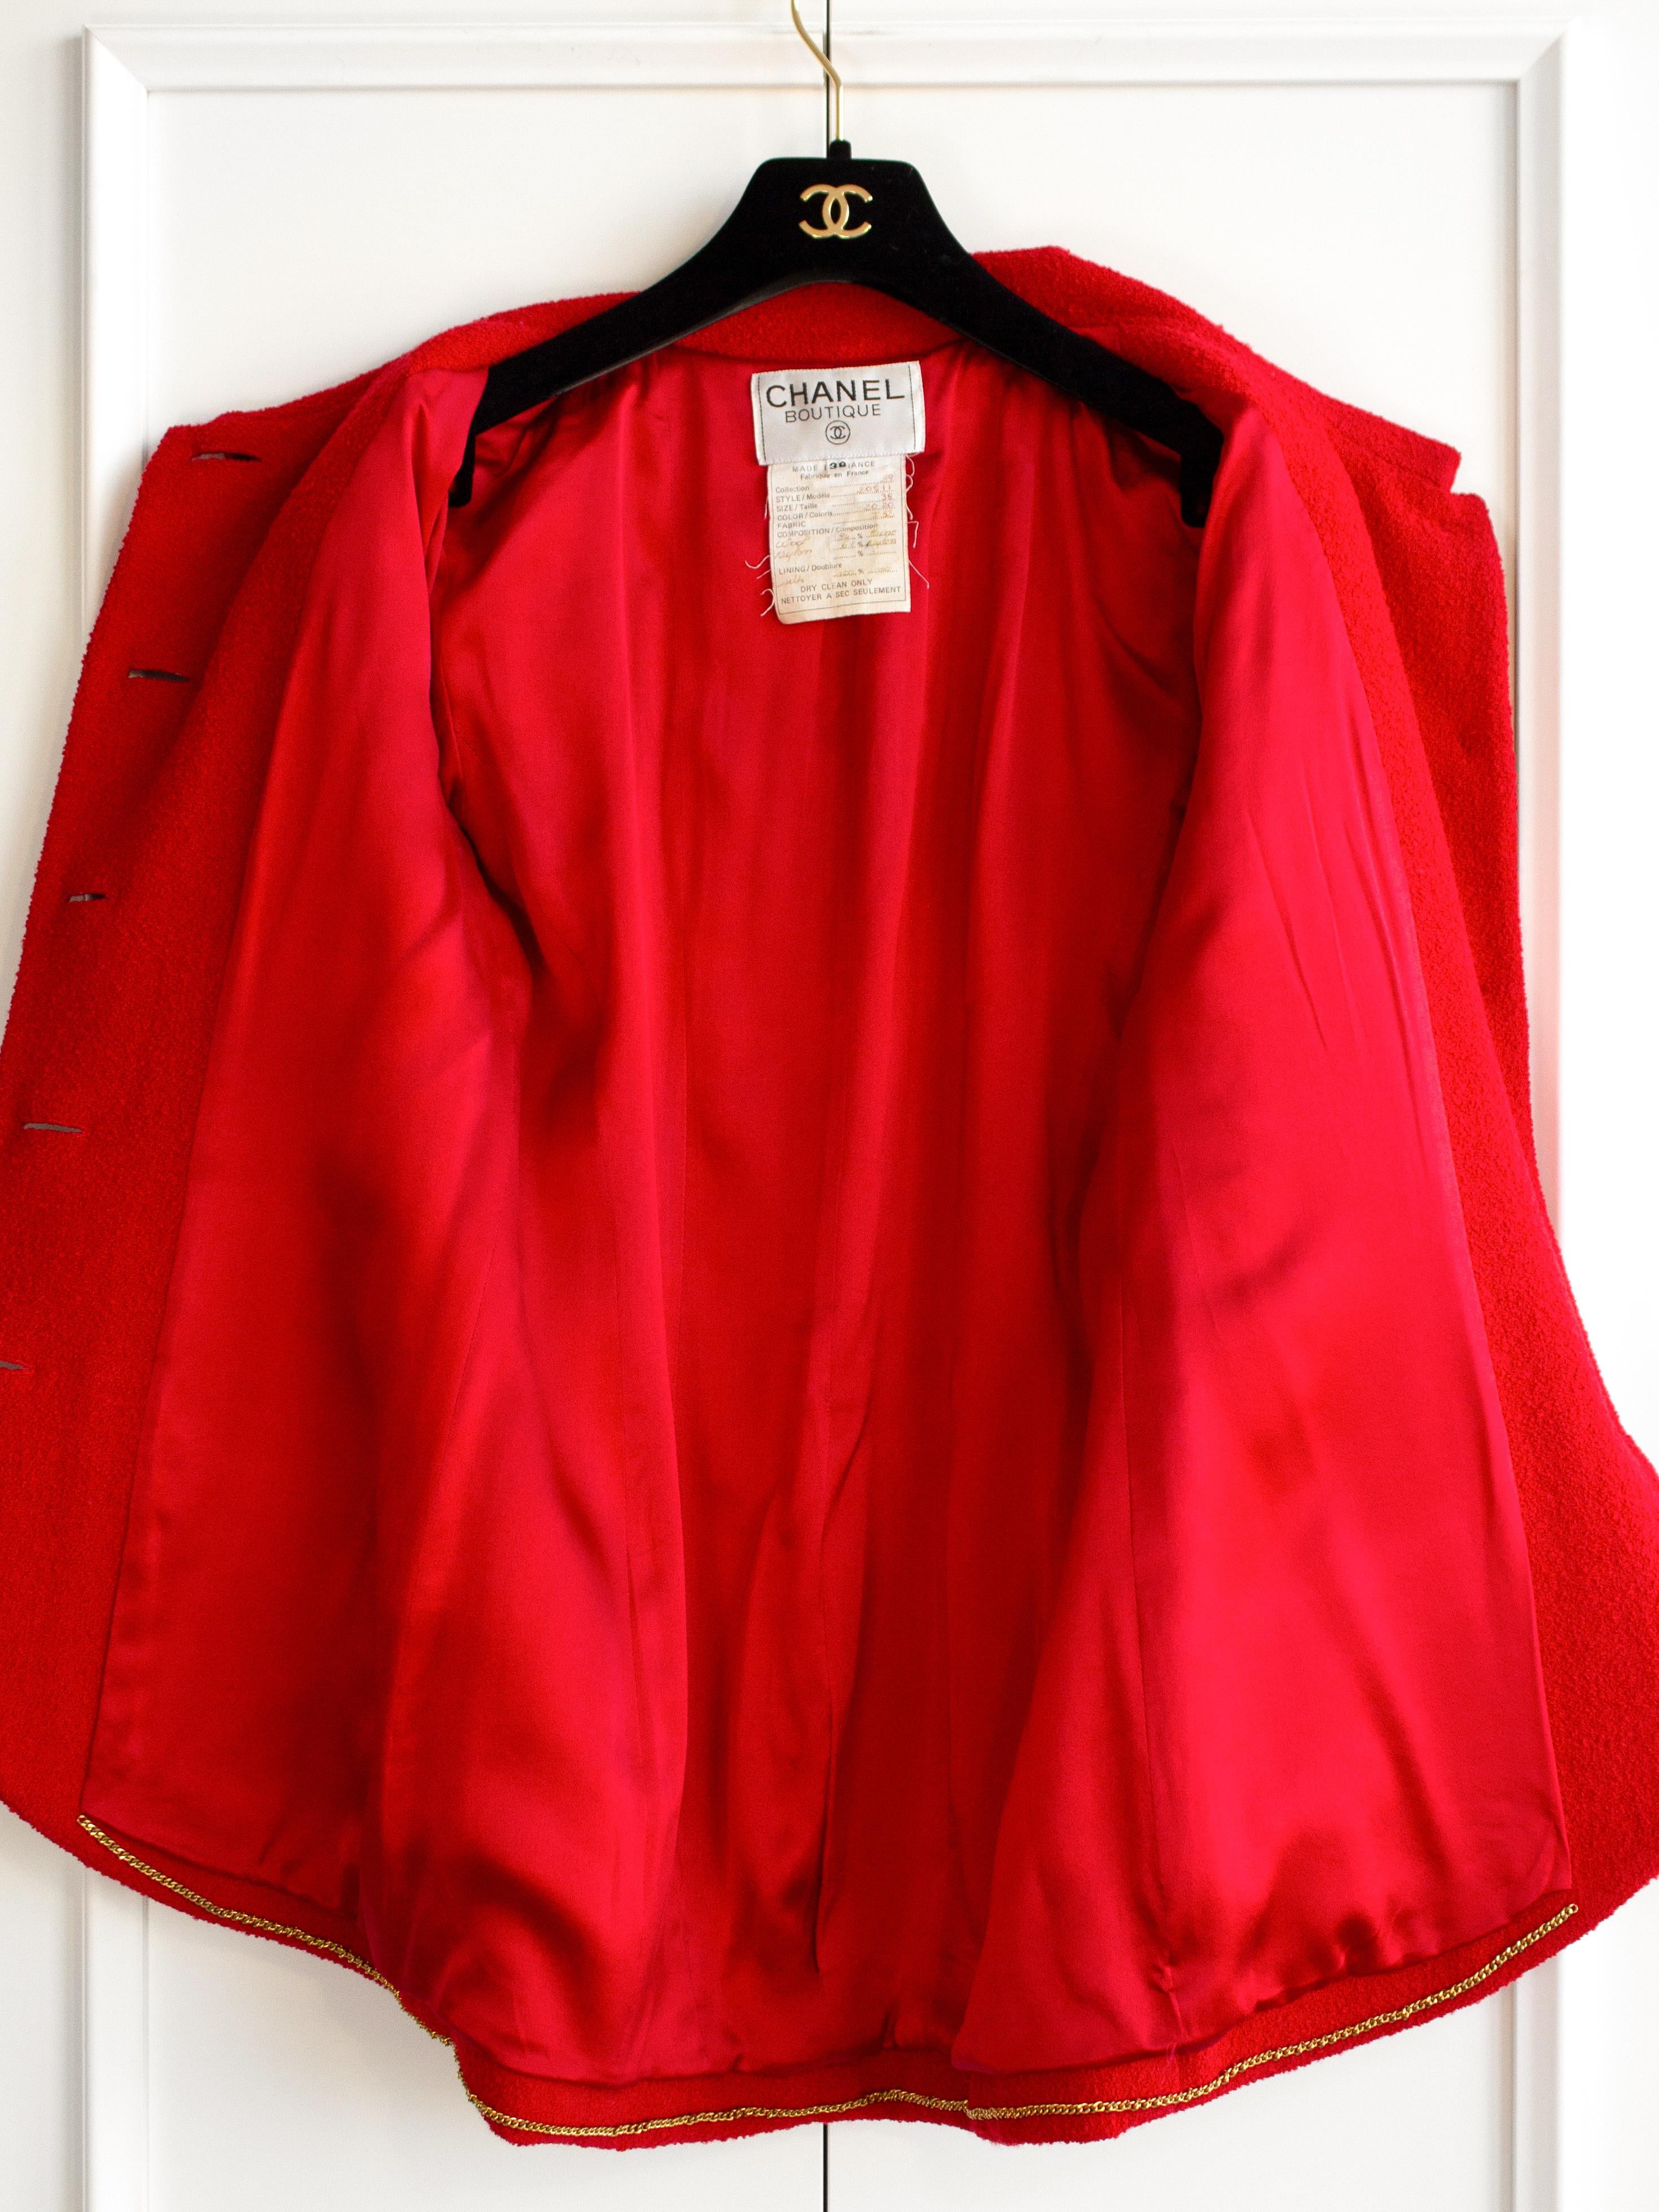 Chanel Vintage Fall/Winter 1992 Runway Parisian Red Gold Tweed Jacket Skirt Suit 9